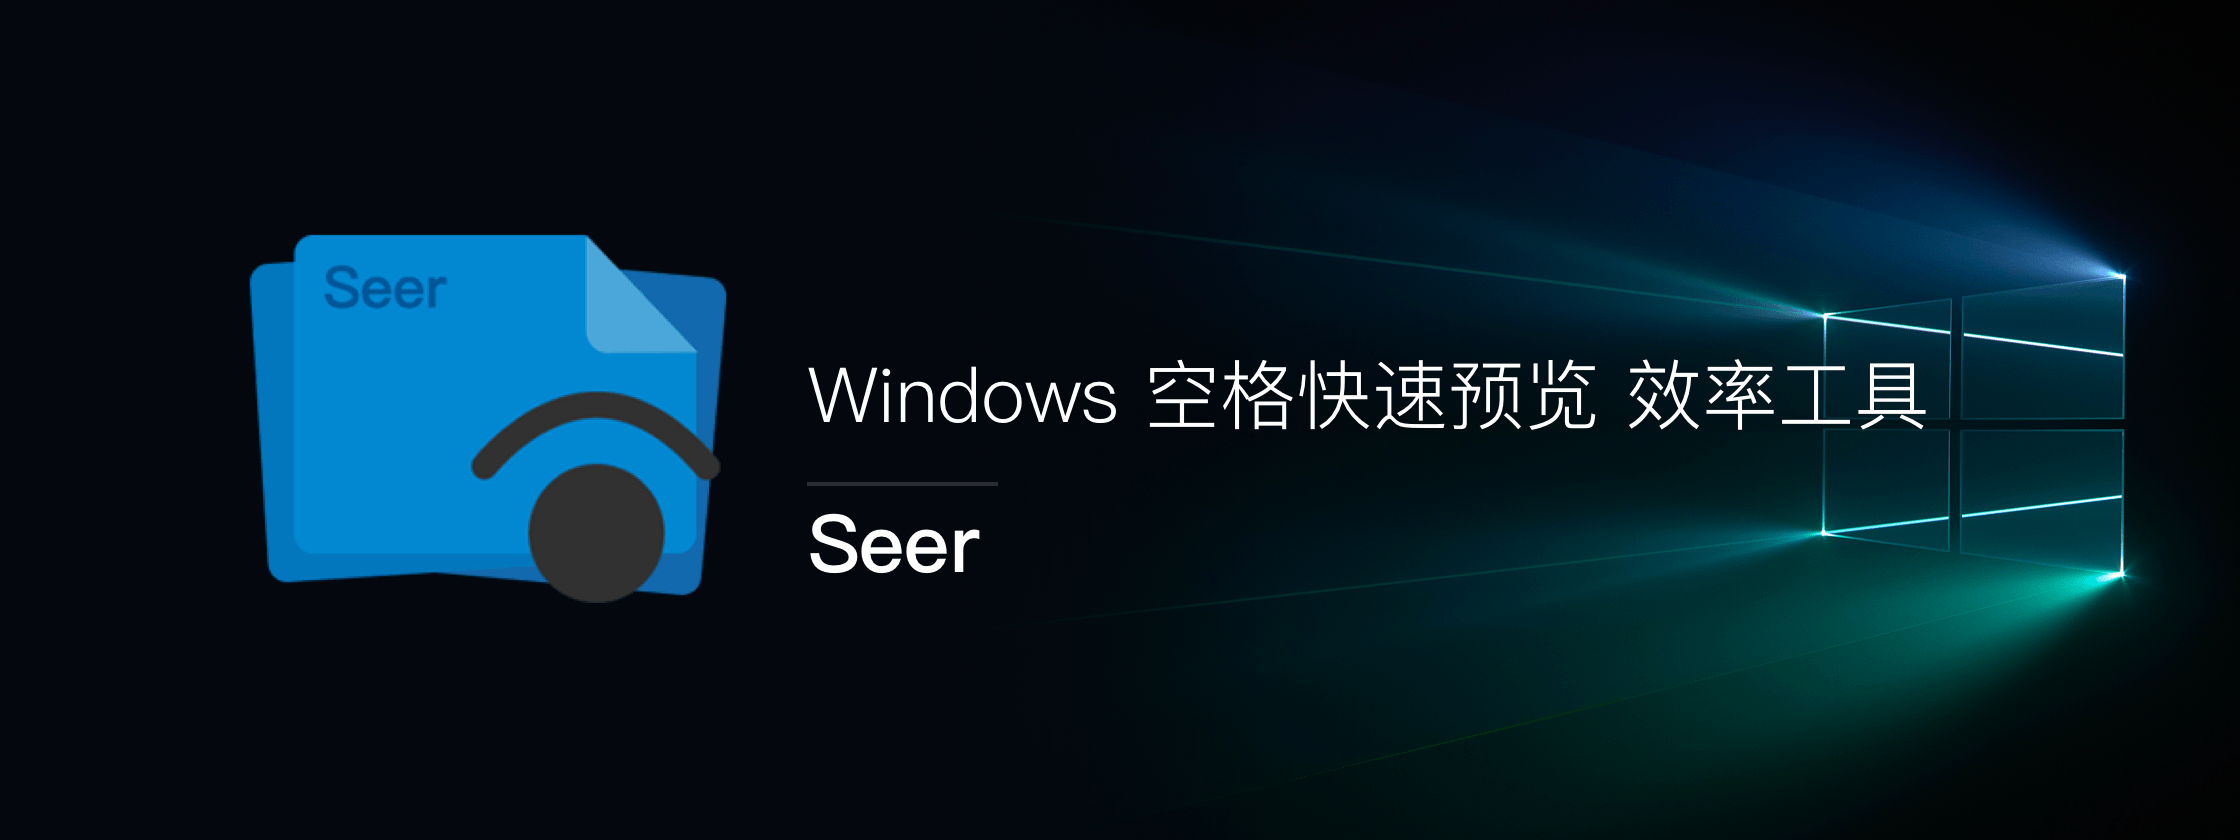 Seer，让 Windows 也能拥有类似 macOS 空格预览功能